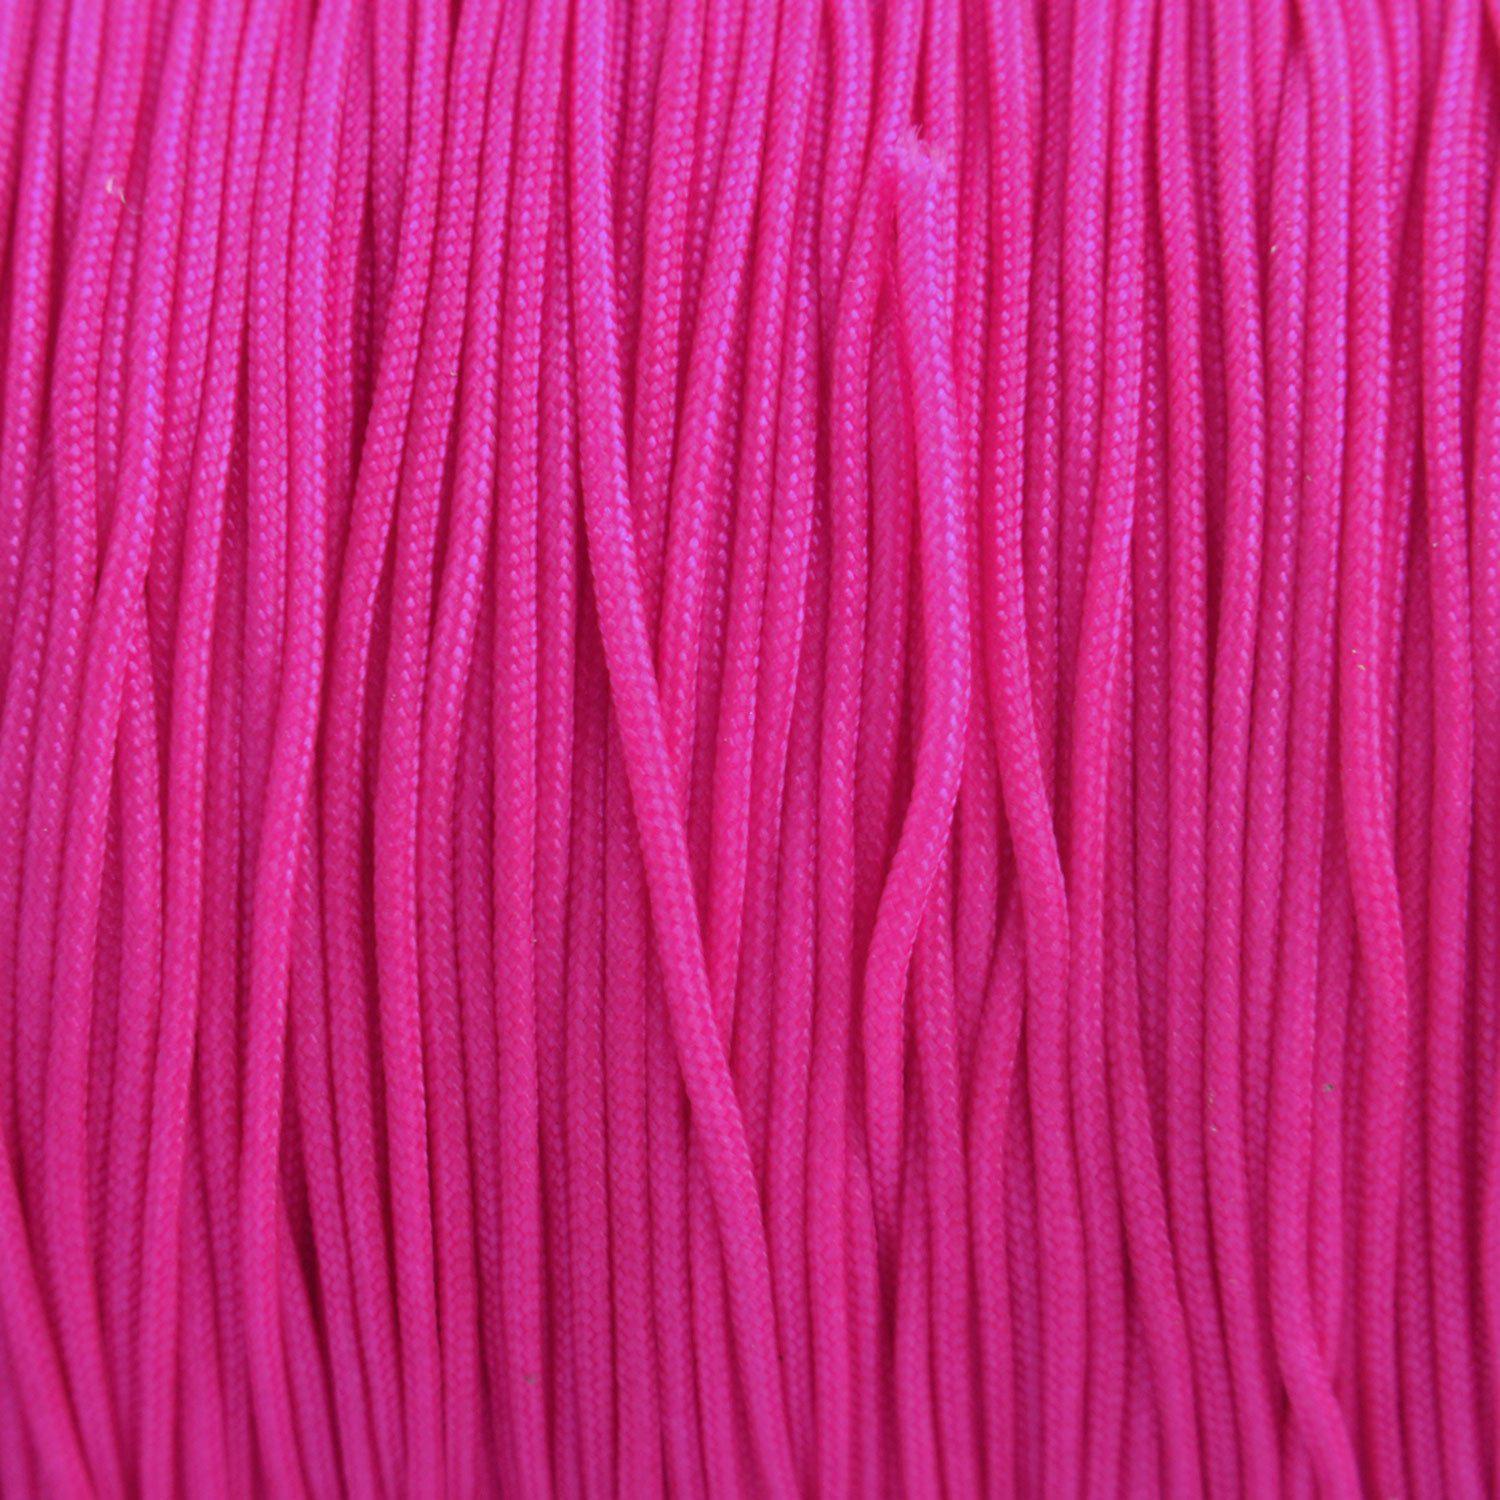 Rol nylon rattail koord fel fuchsia roze 0.8mm - 90 meter-Kraaltjes van Renate